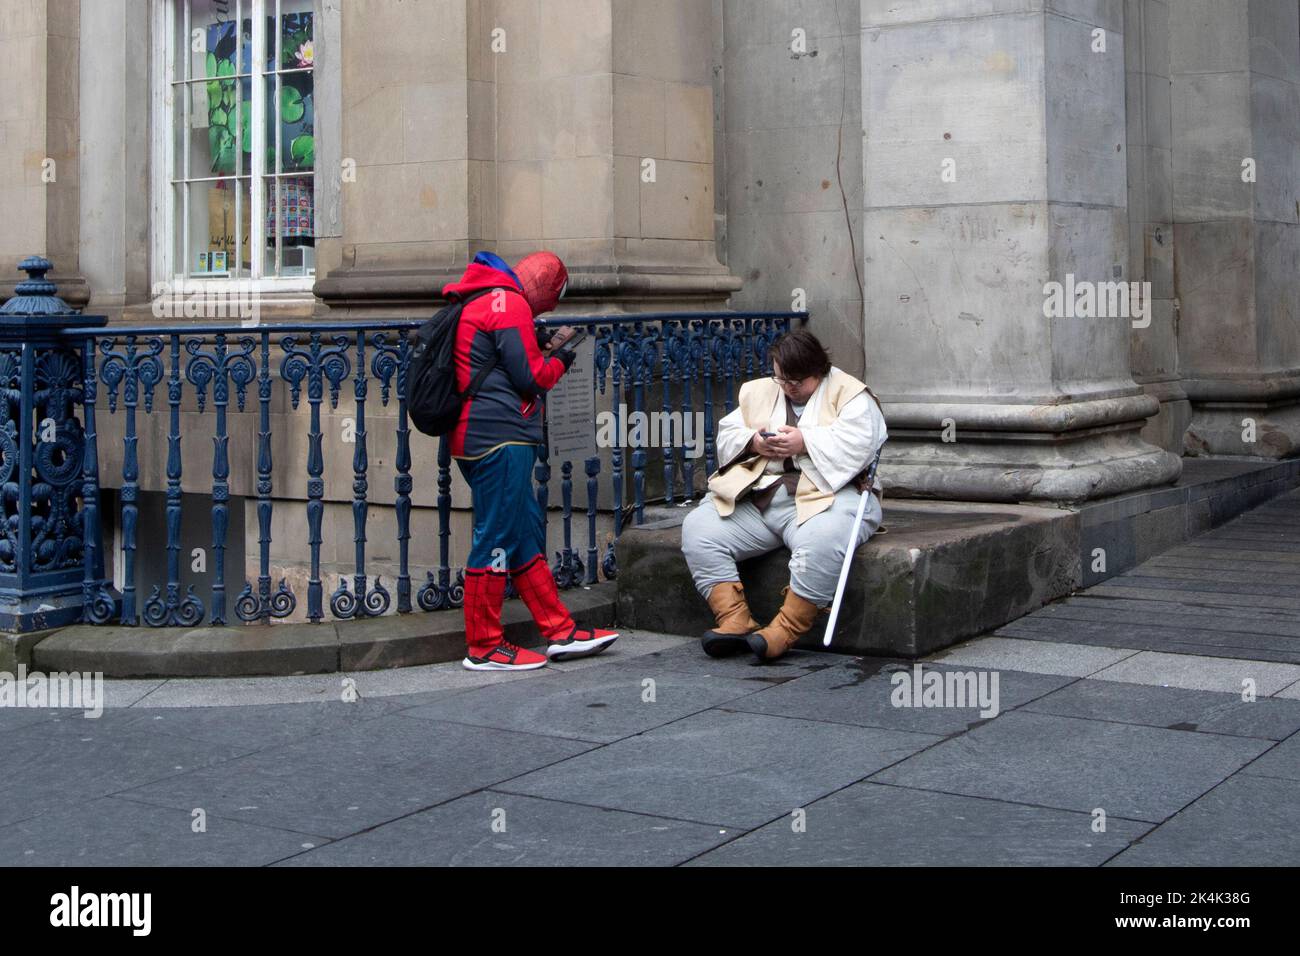 Spider man and Obi-wan Kenobi check their phones, outside the Gallery of Modern Art, Glasgow, Glasgow Scotland UK Stock Photo